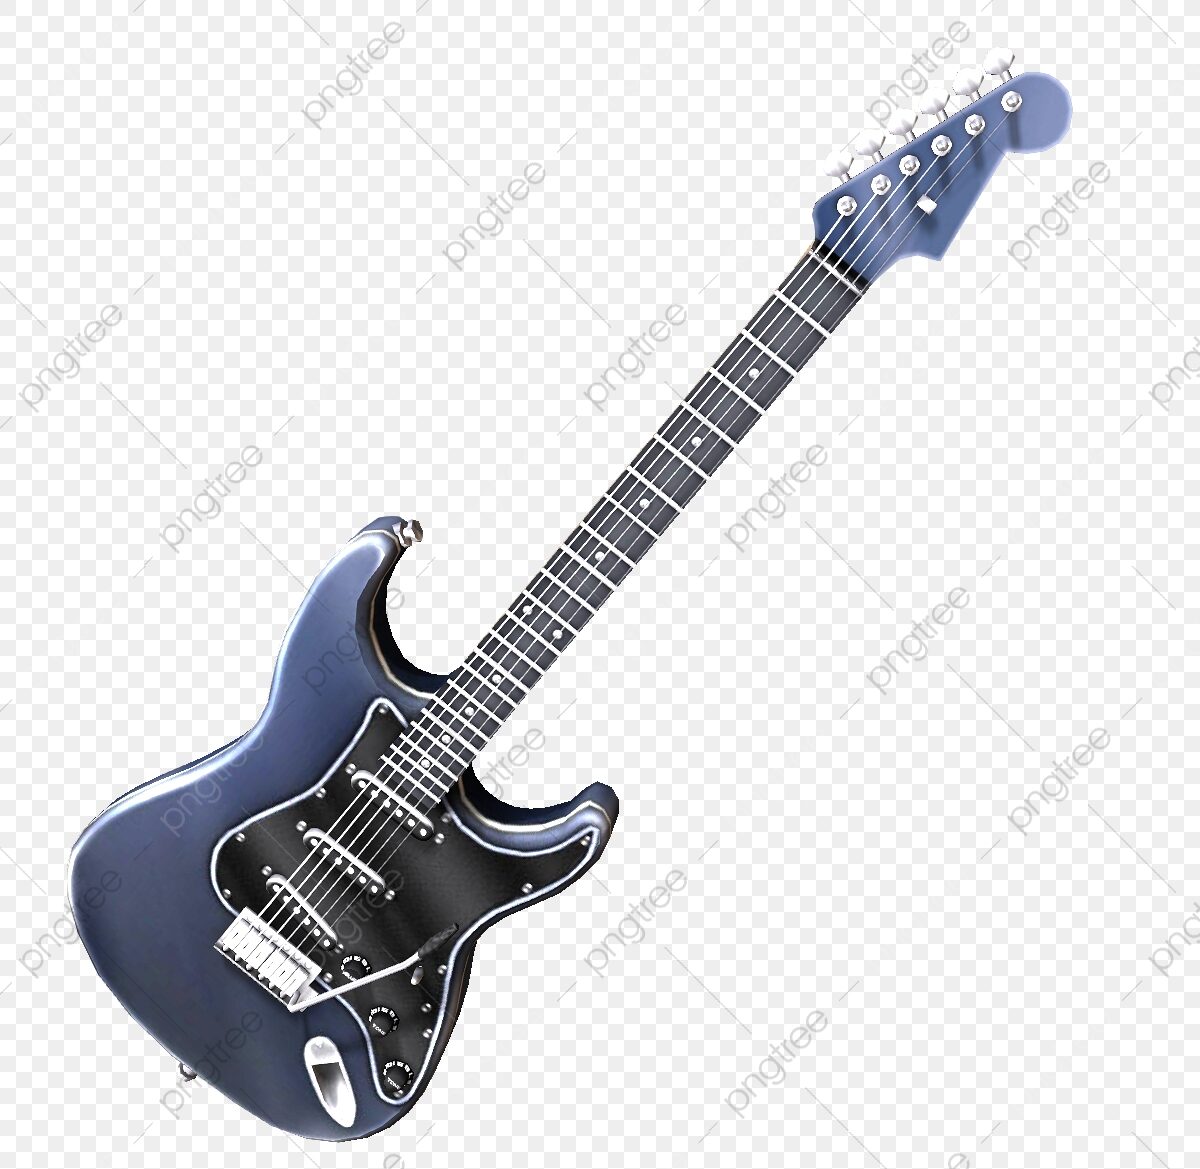 pngtree-rock-electric-guitar-png-image_4974345.jpg